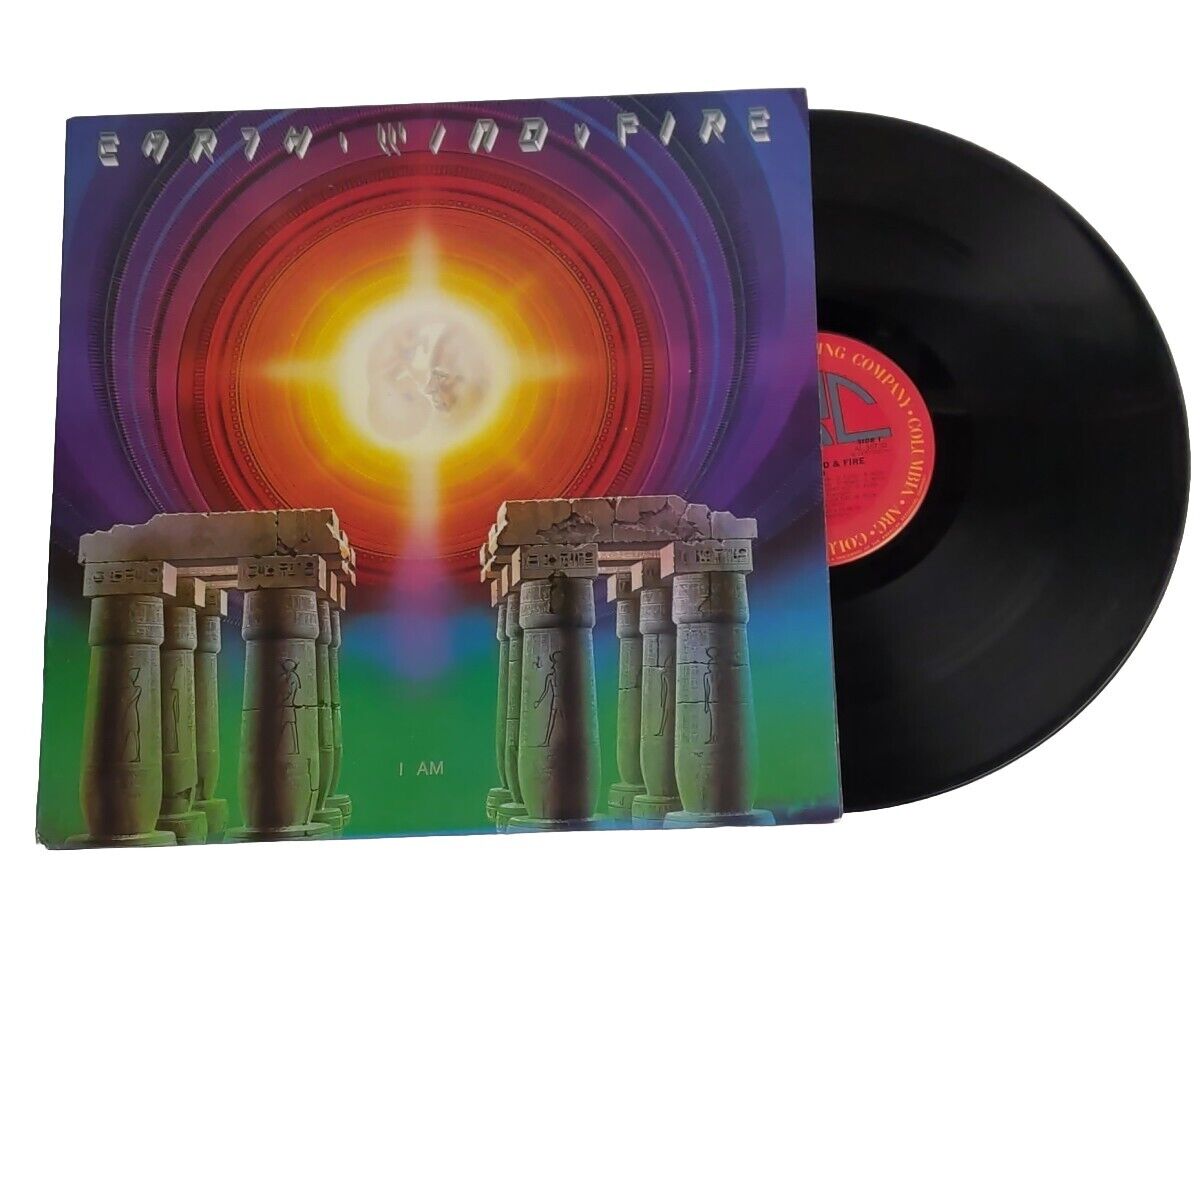 Vintage Earth, Wind & Fire - I Am 1979 Vinyl Record LP Album Gatefold